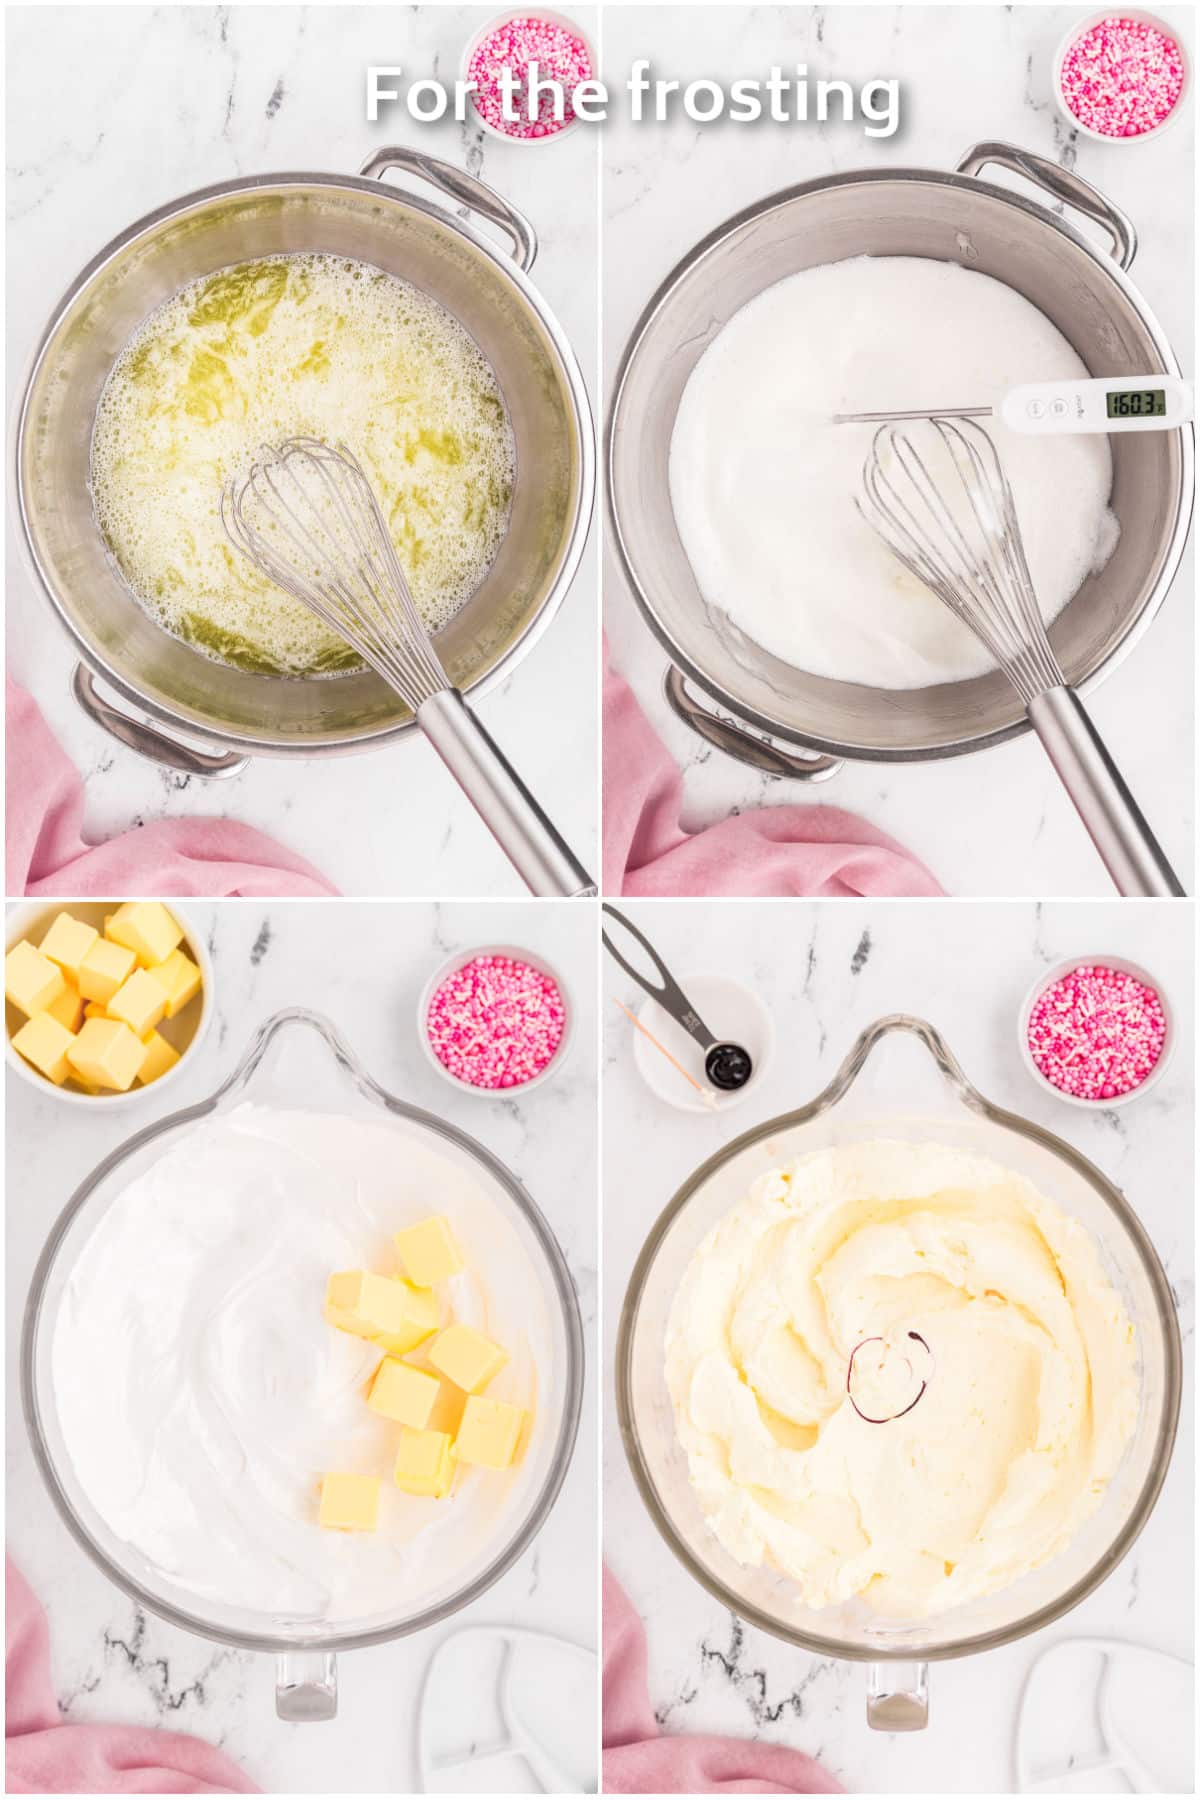 Swiss meringue buttercream being prepared in a mixer.